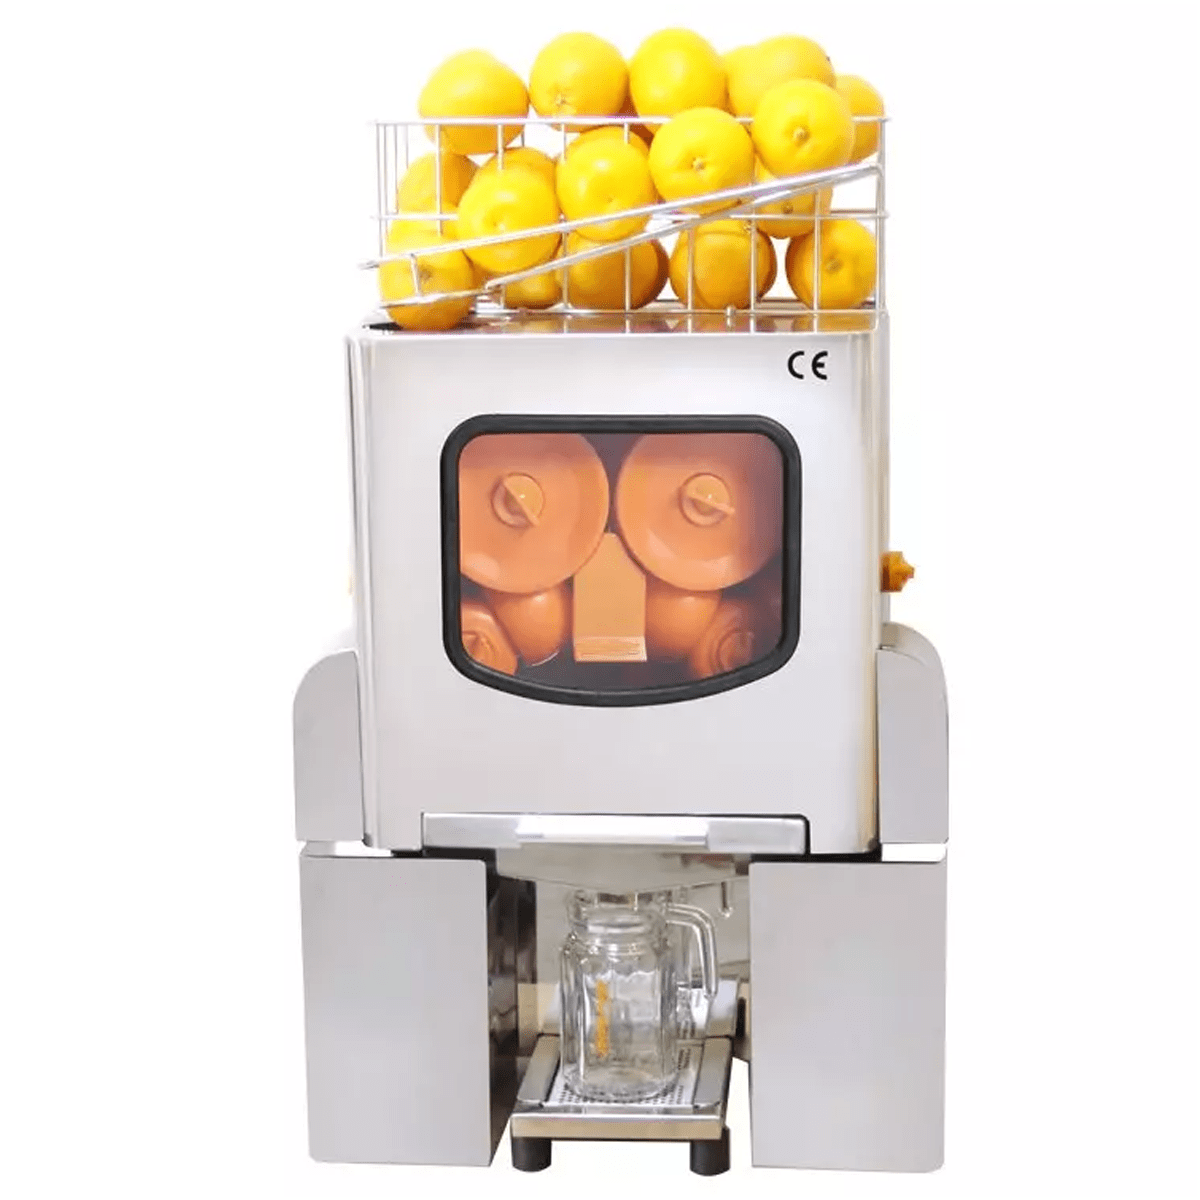 2000E-3 Commercial automatic electric orange juicer